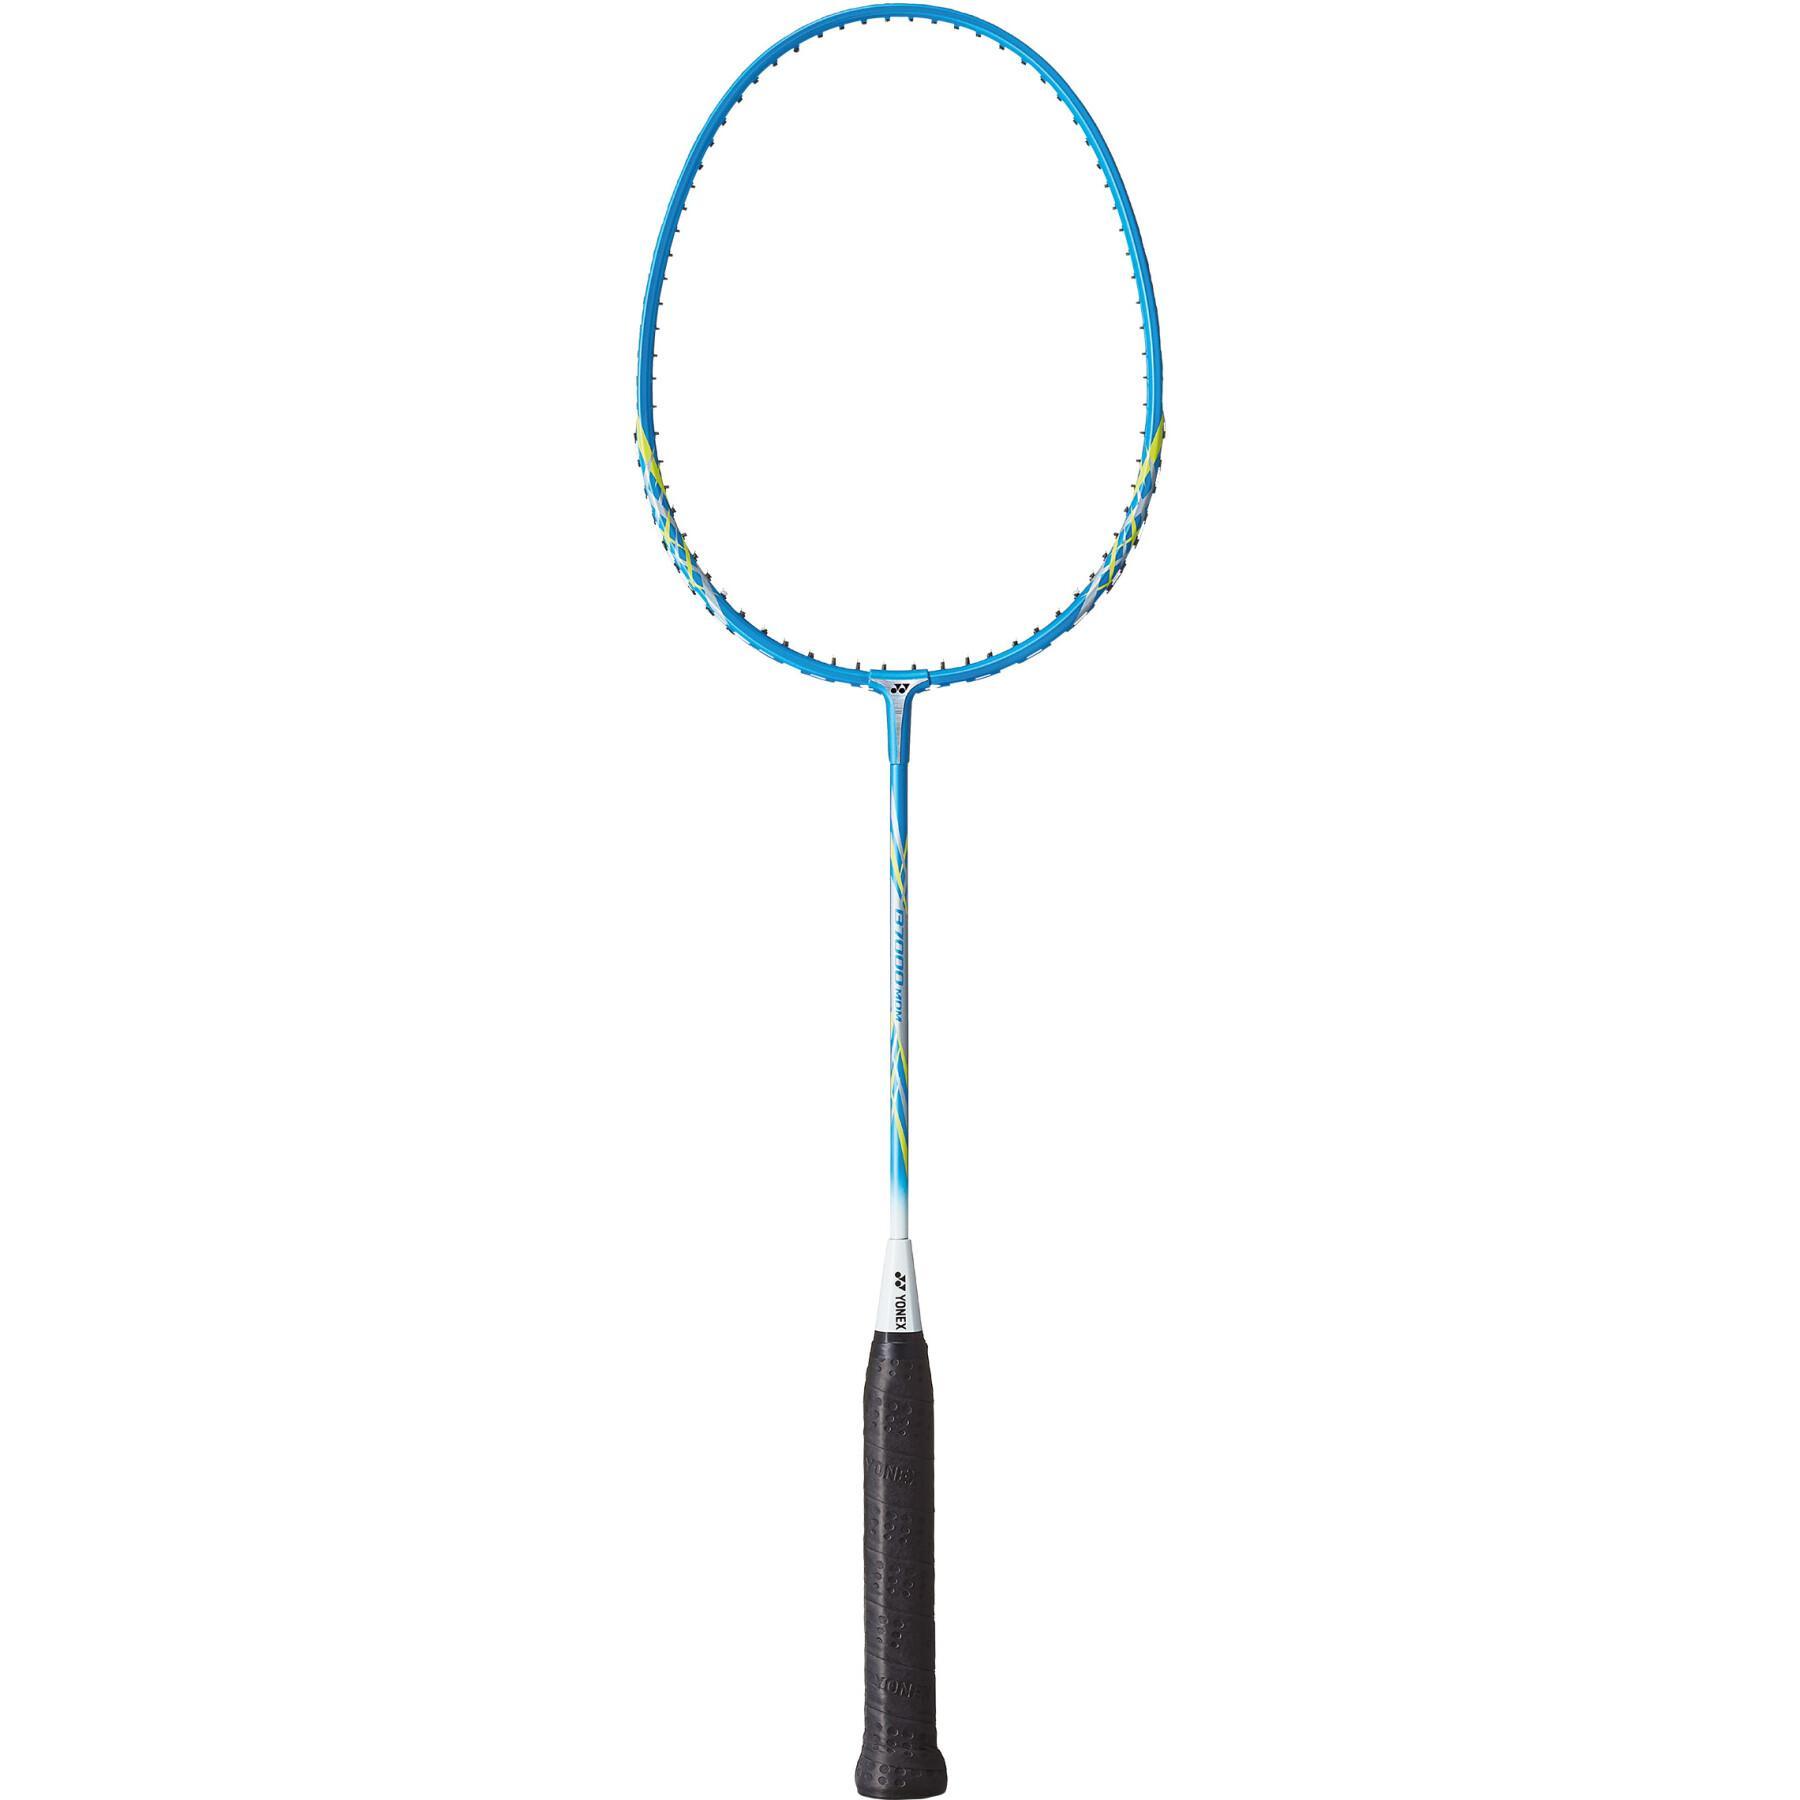 Badmintonschläger Yonex B4000 U4